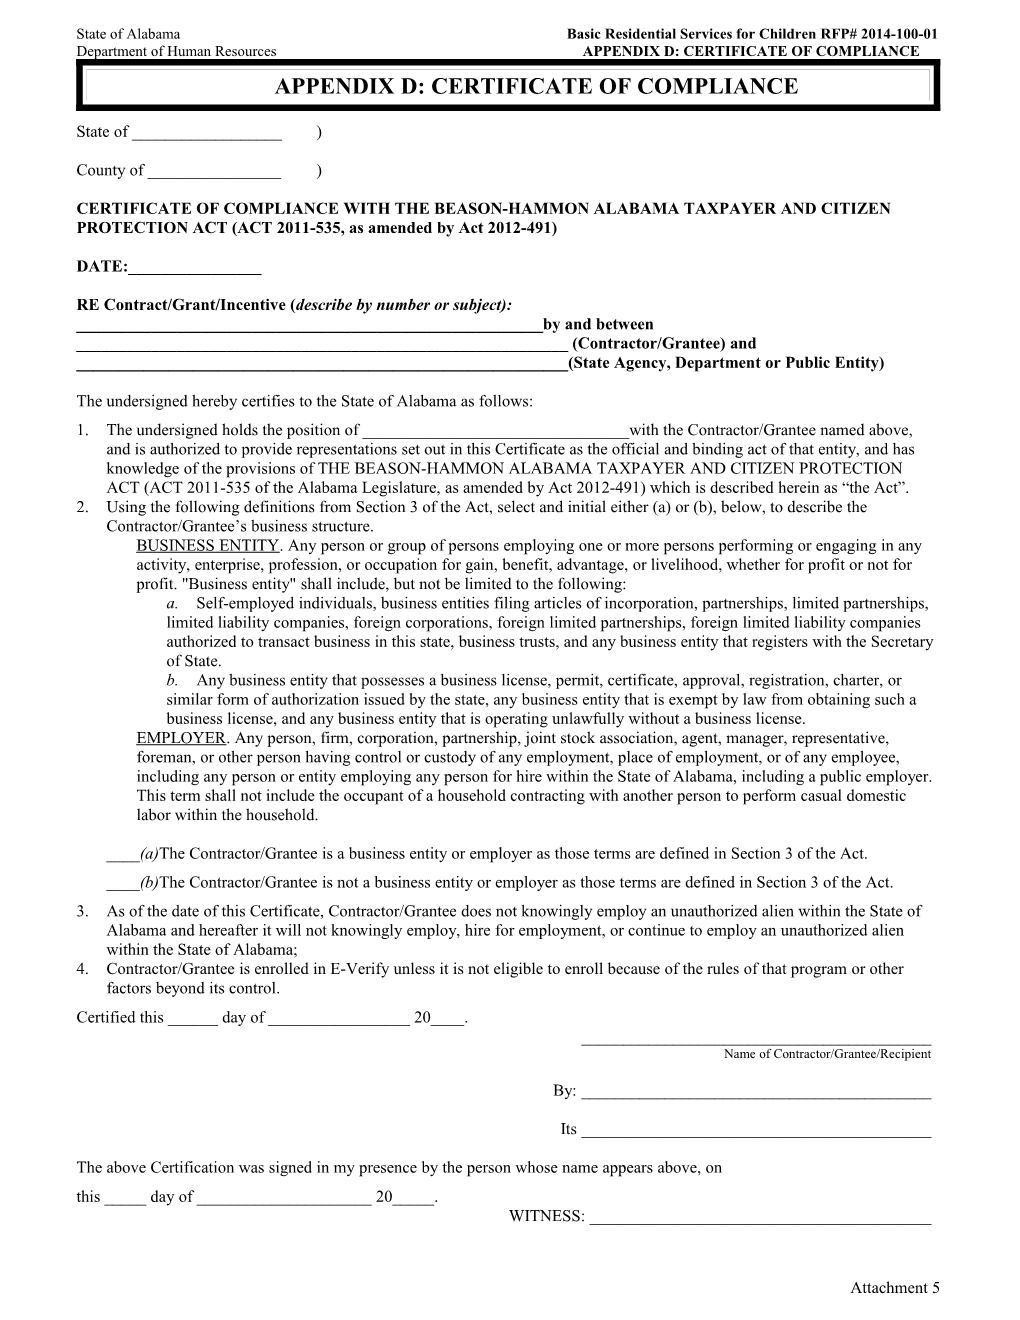 Appendix D: Certificate of Compliance